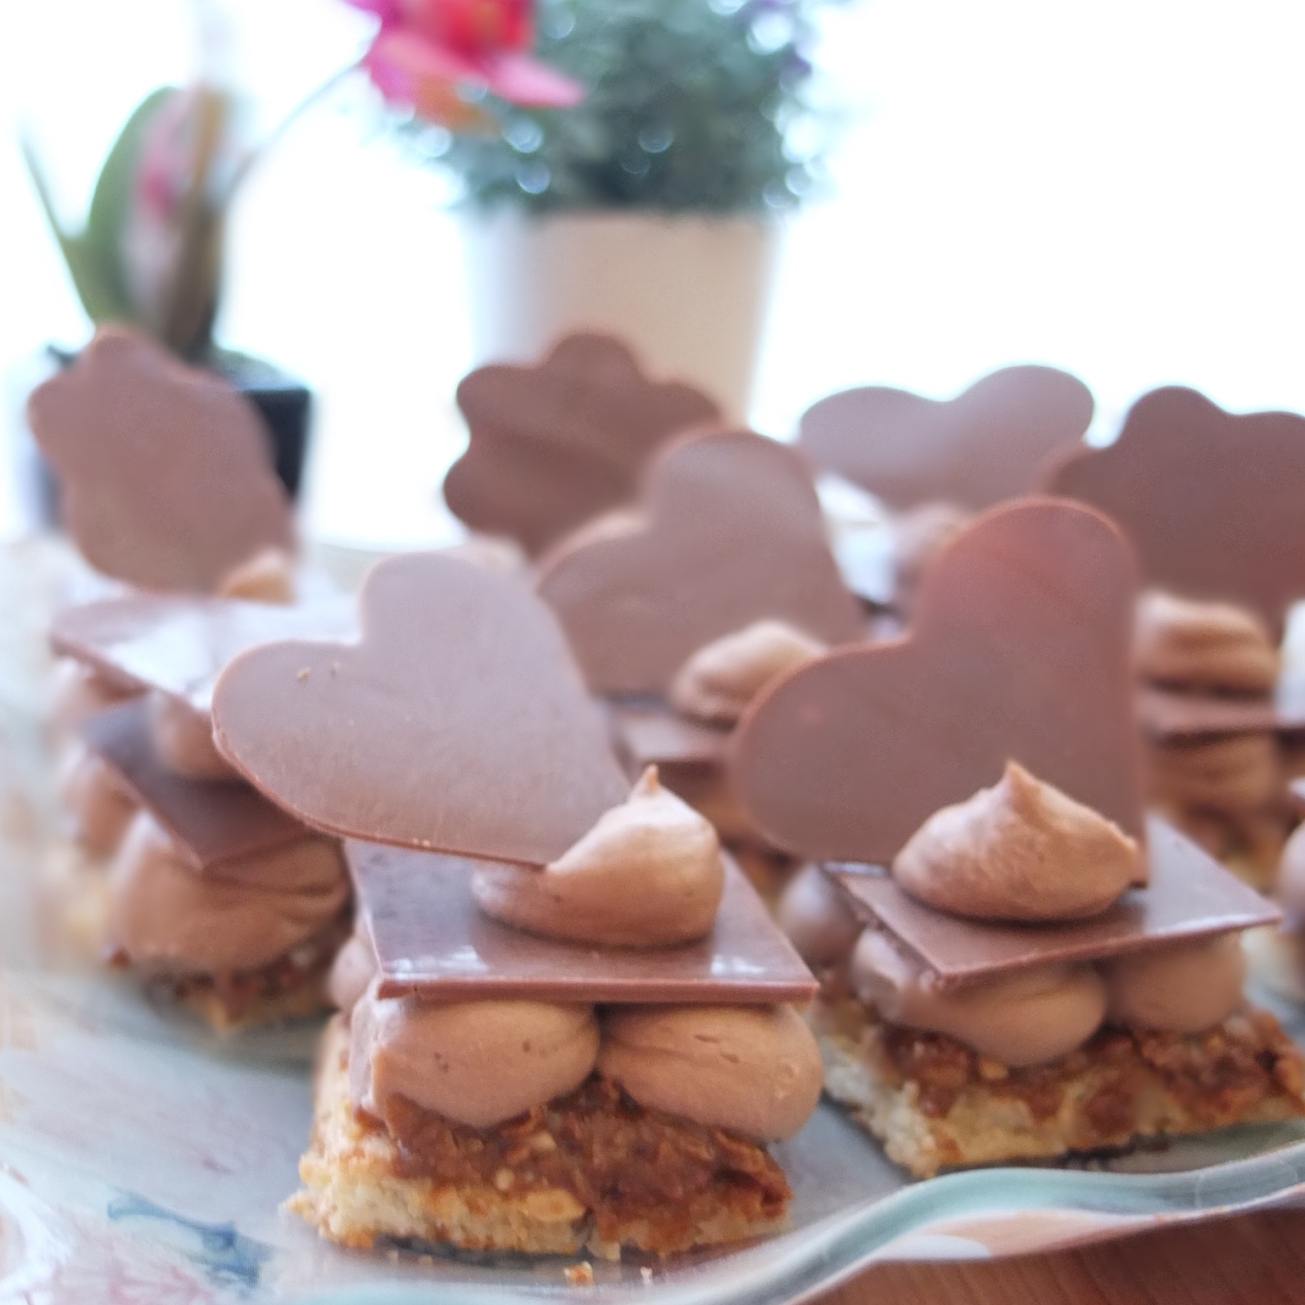 Dreamy chocolate hazelnut dacquoise mini cakes